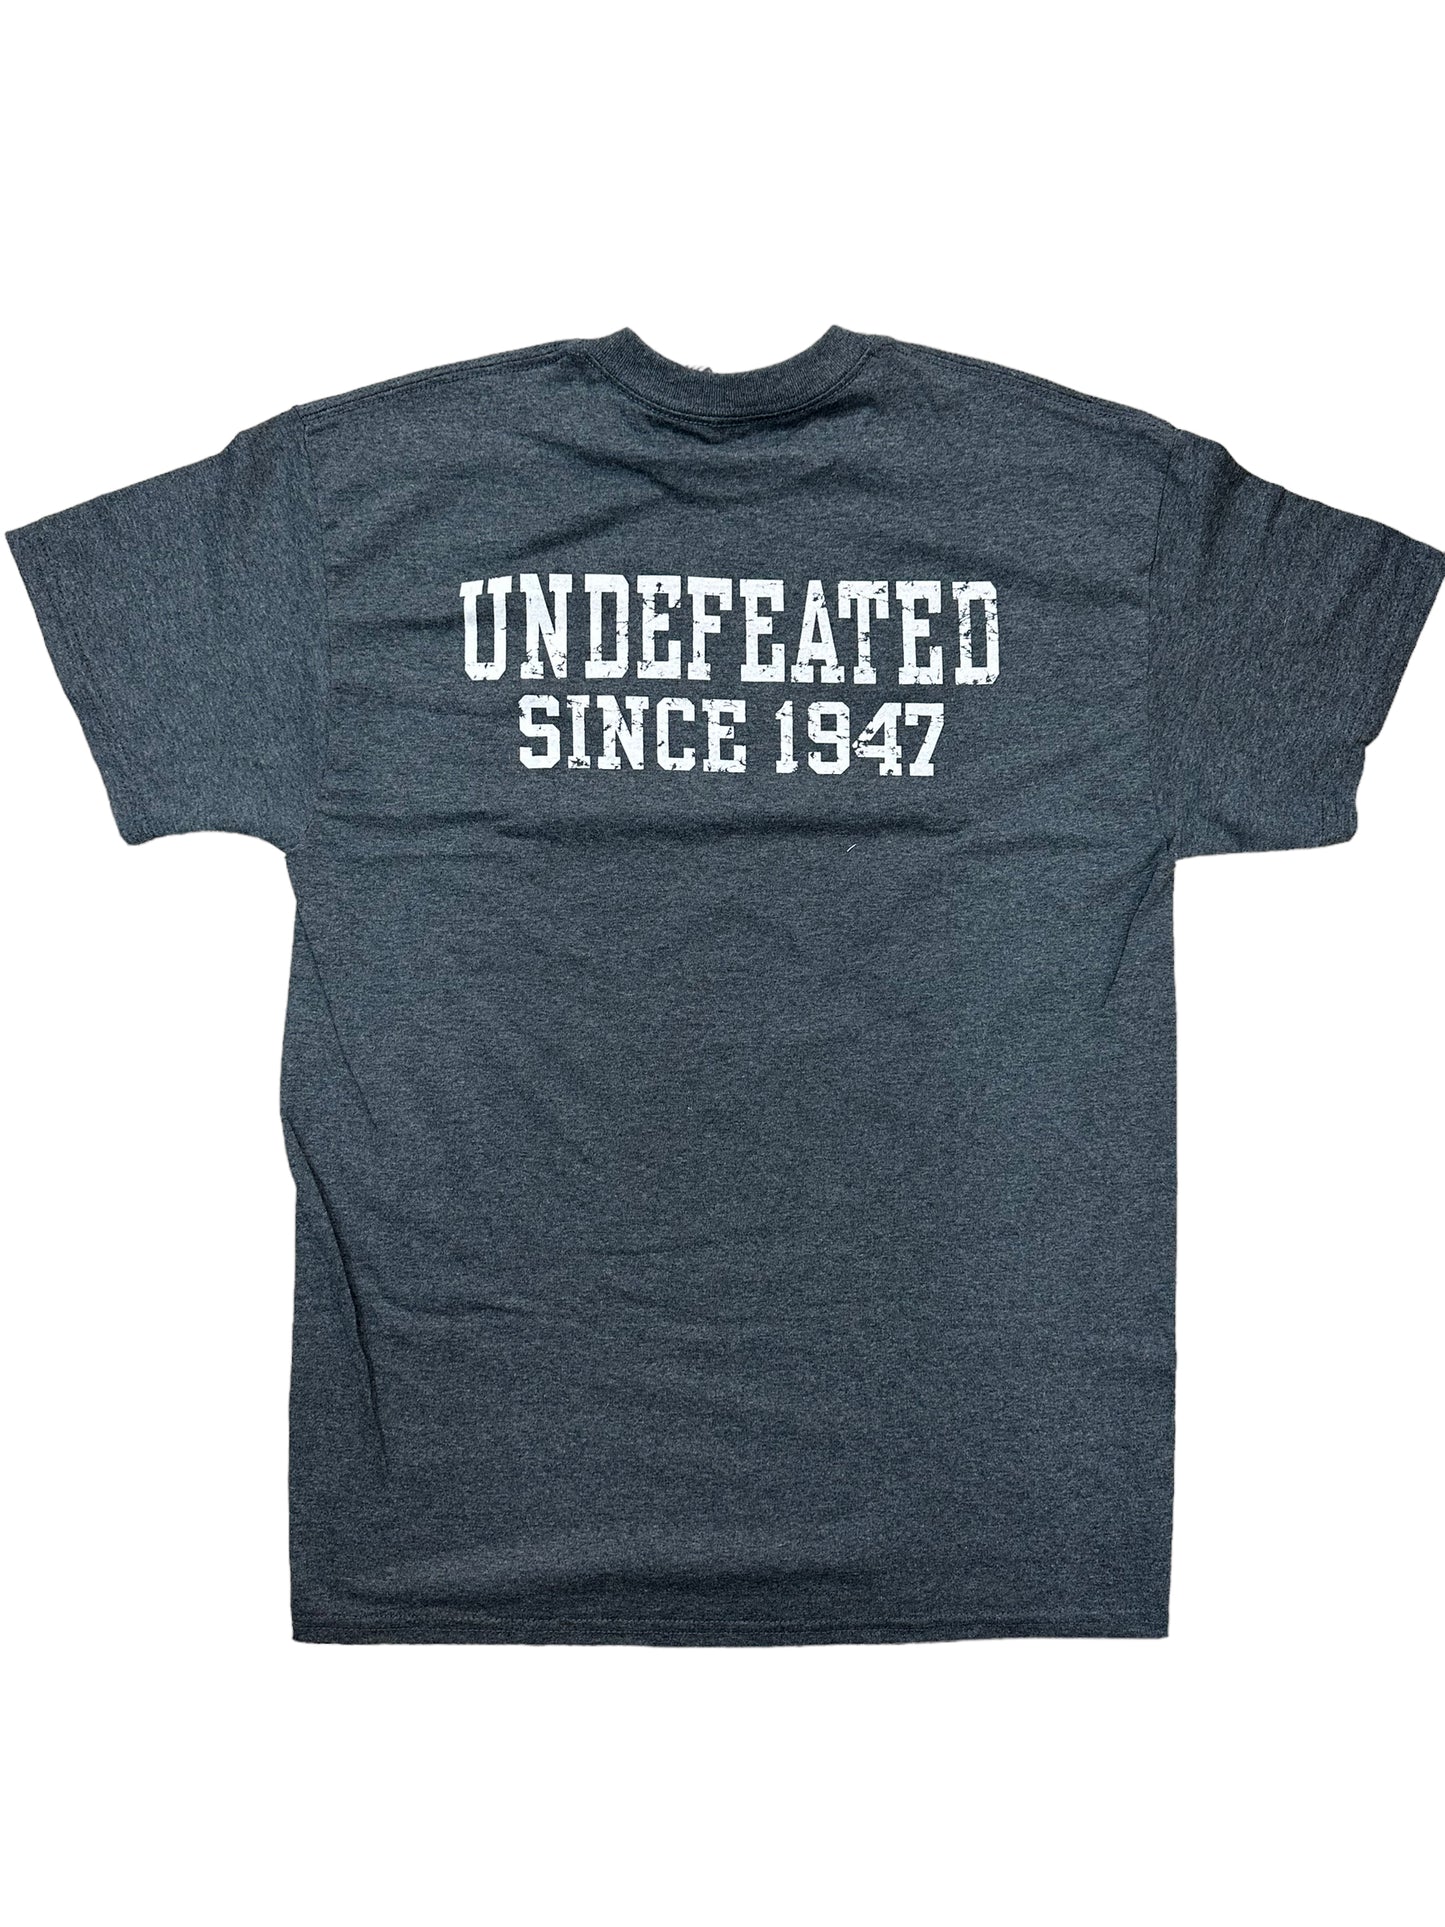 UNCW Football Undefeated  - T Shirt - Dark Heather